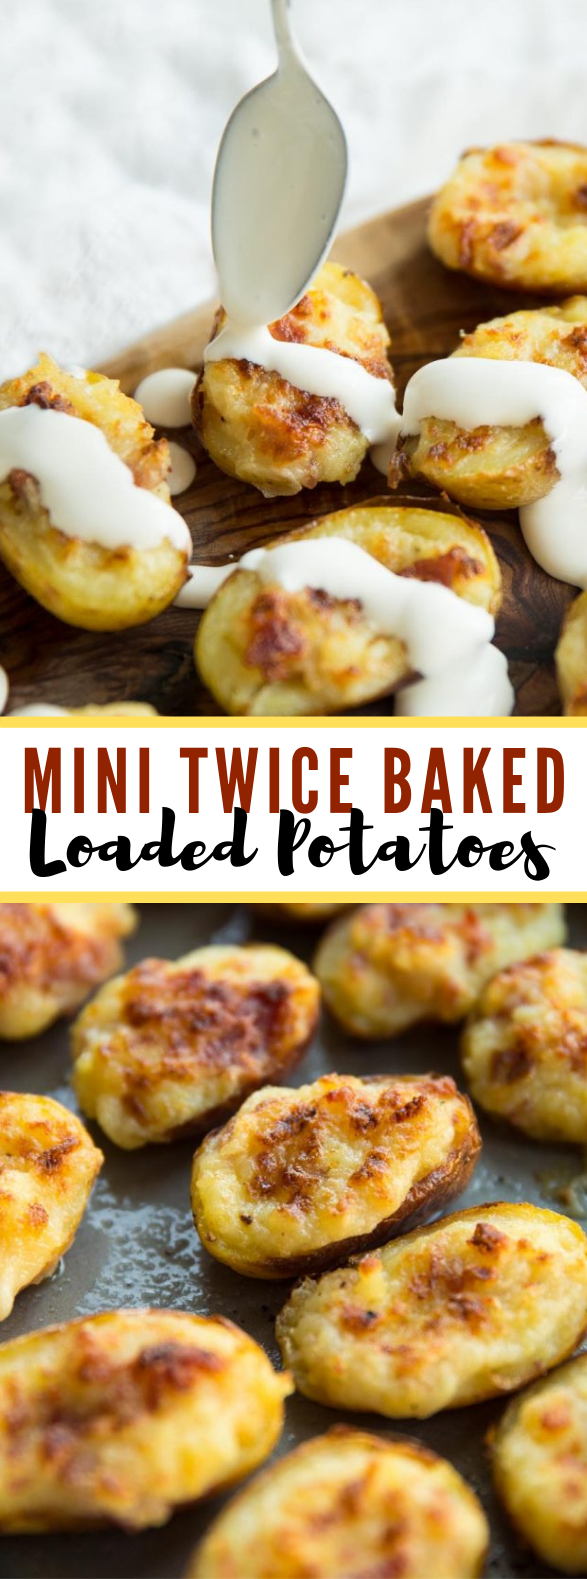 Mini Twice Baked Loaded Potatoes #appetizers #dinner